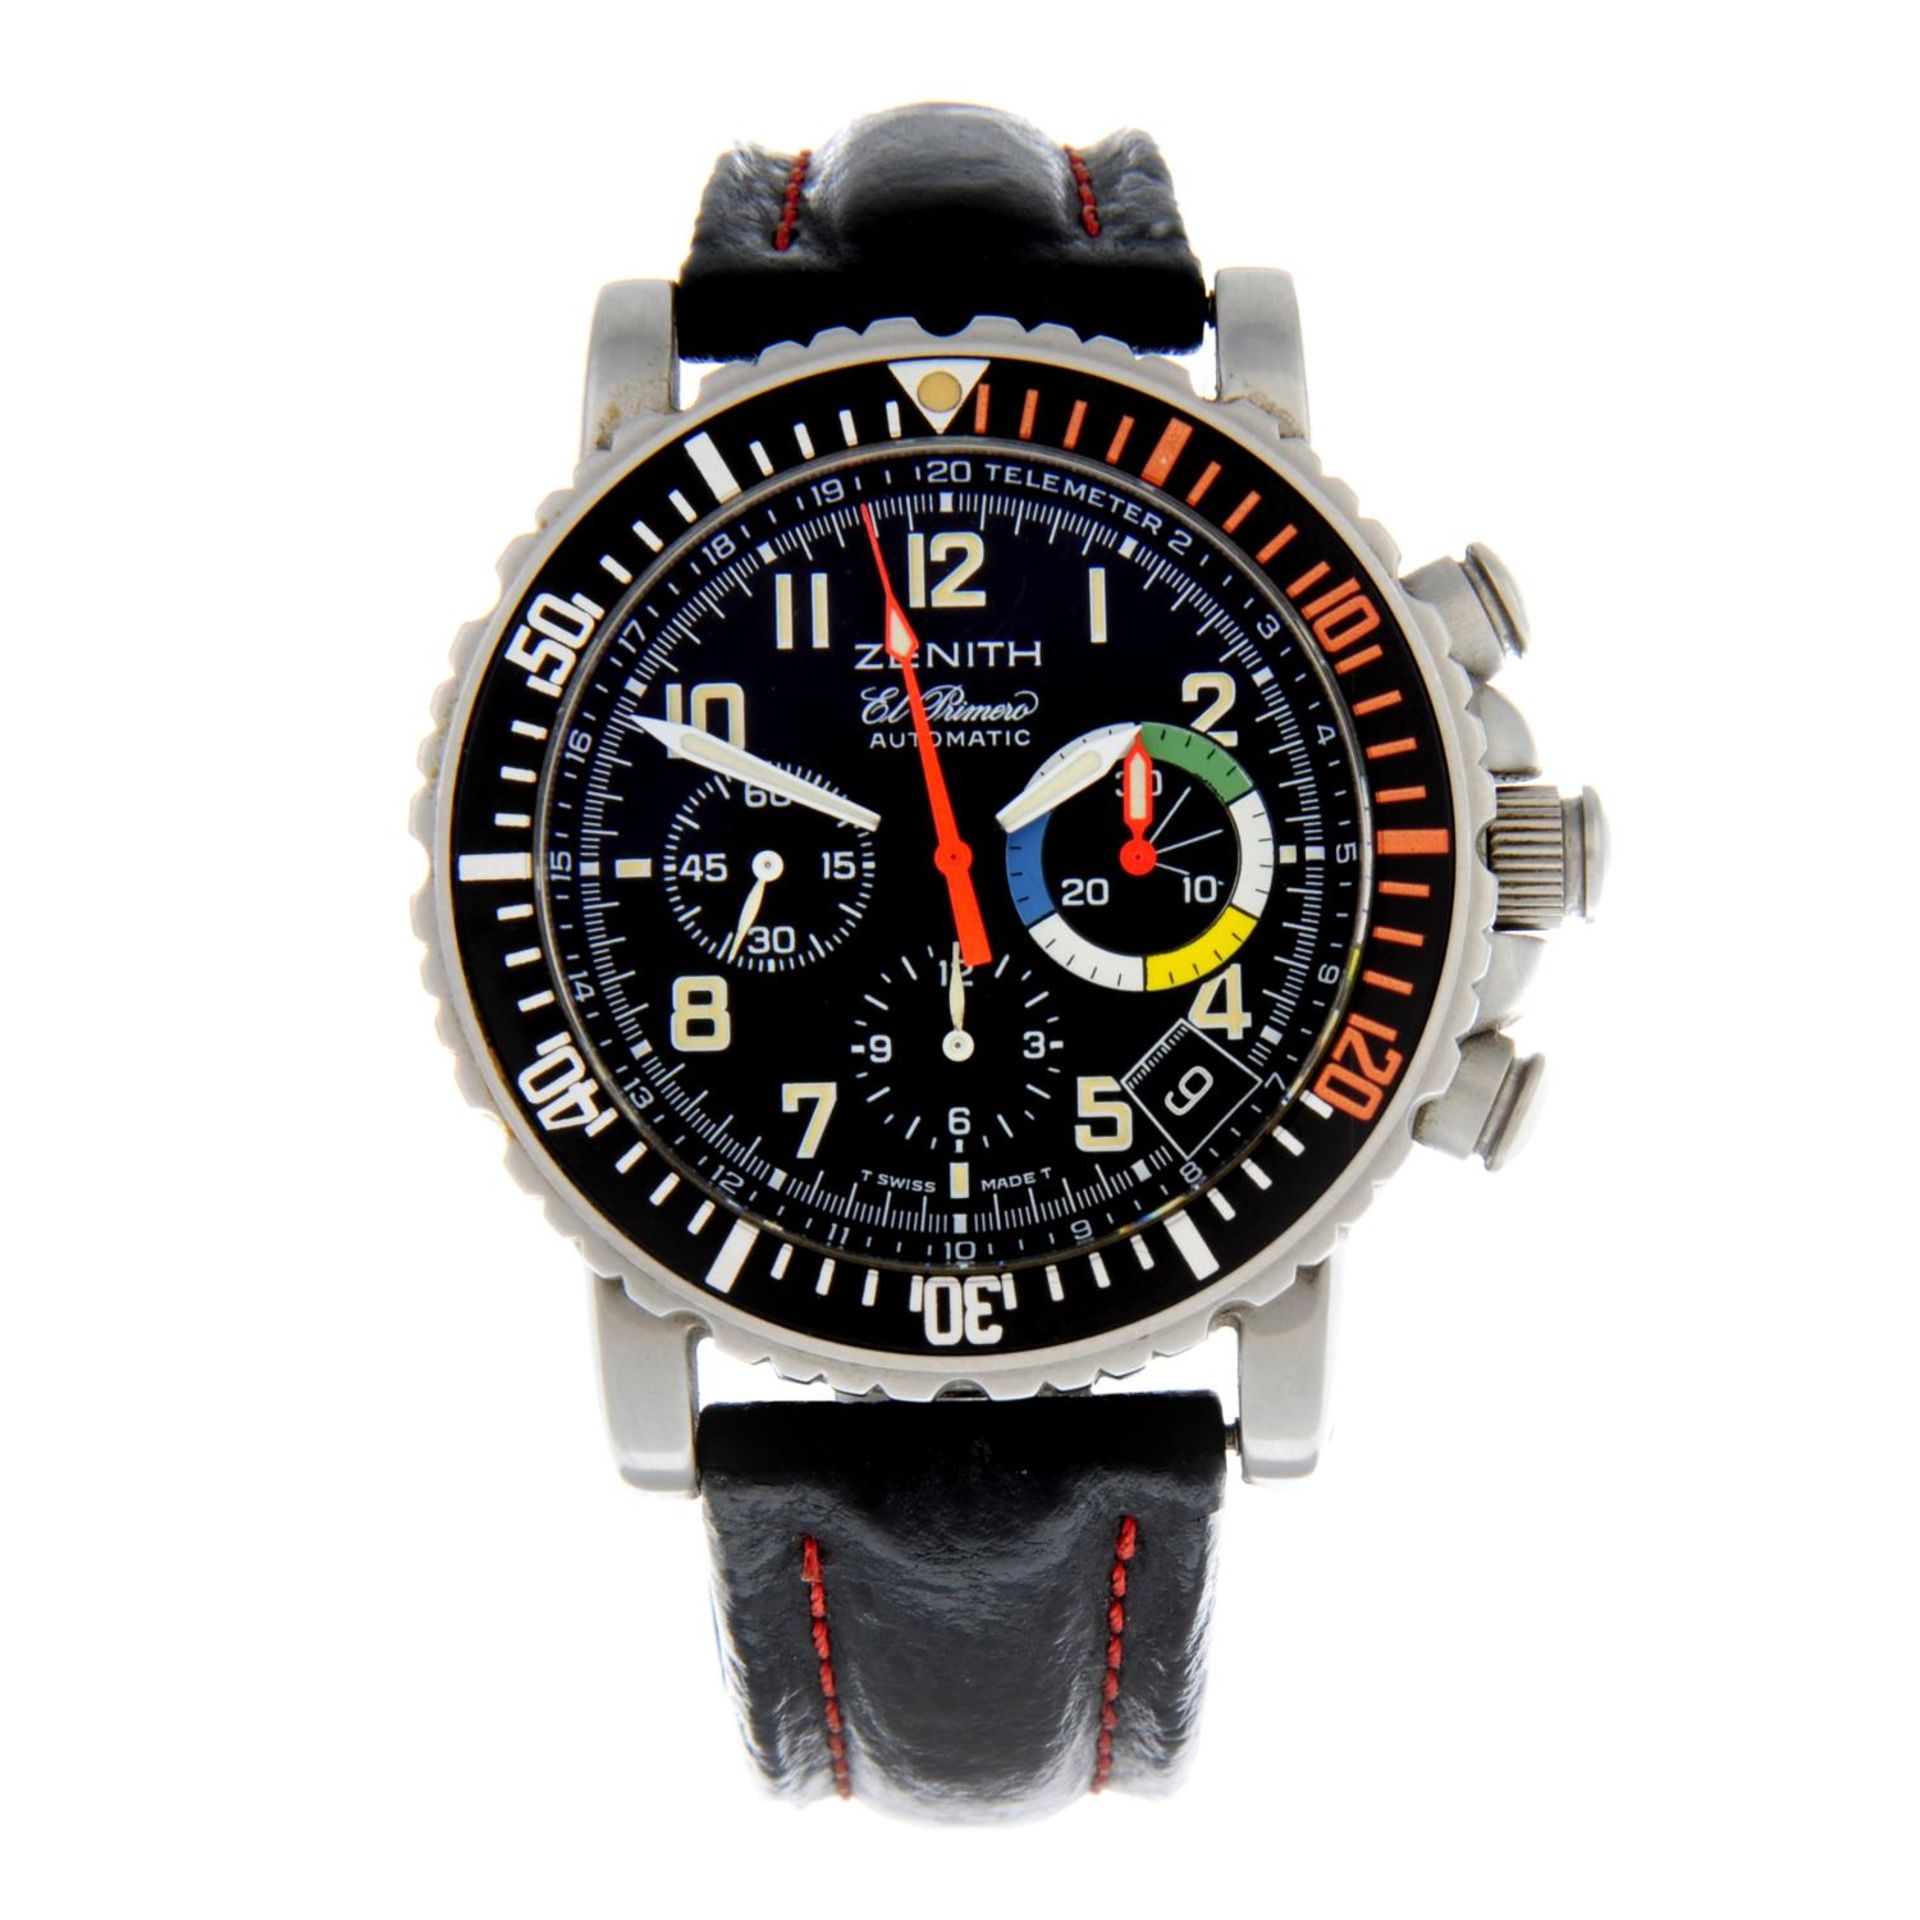 ZENITH - an El Primero Rainbow Fly-back chronograph wrist watch.